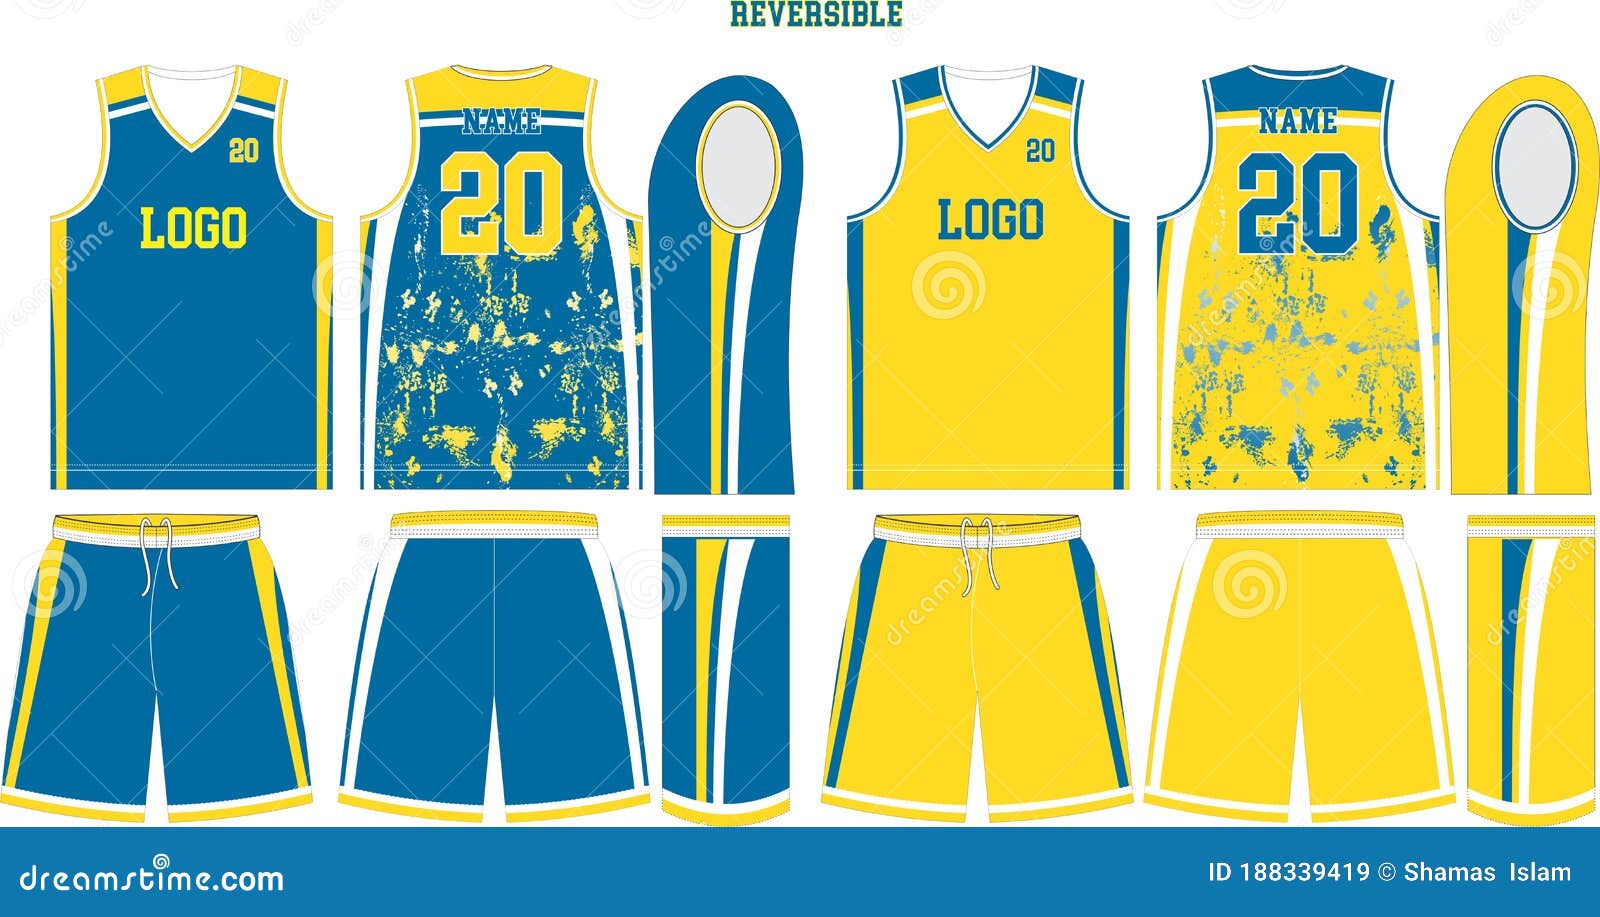 Download Reversible Basketball Uniform Jersey Shorts Custom Designs ...